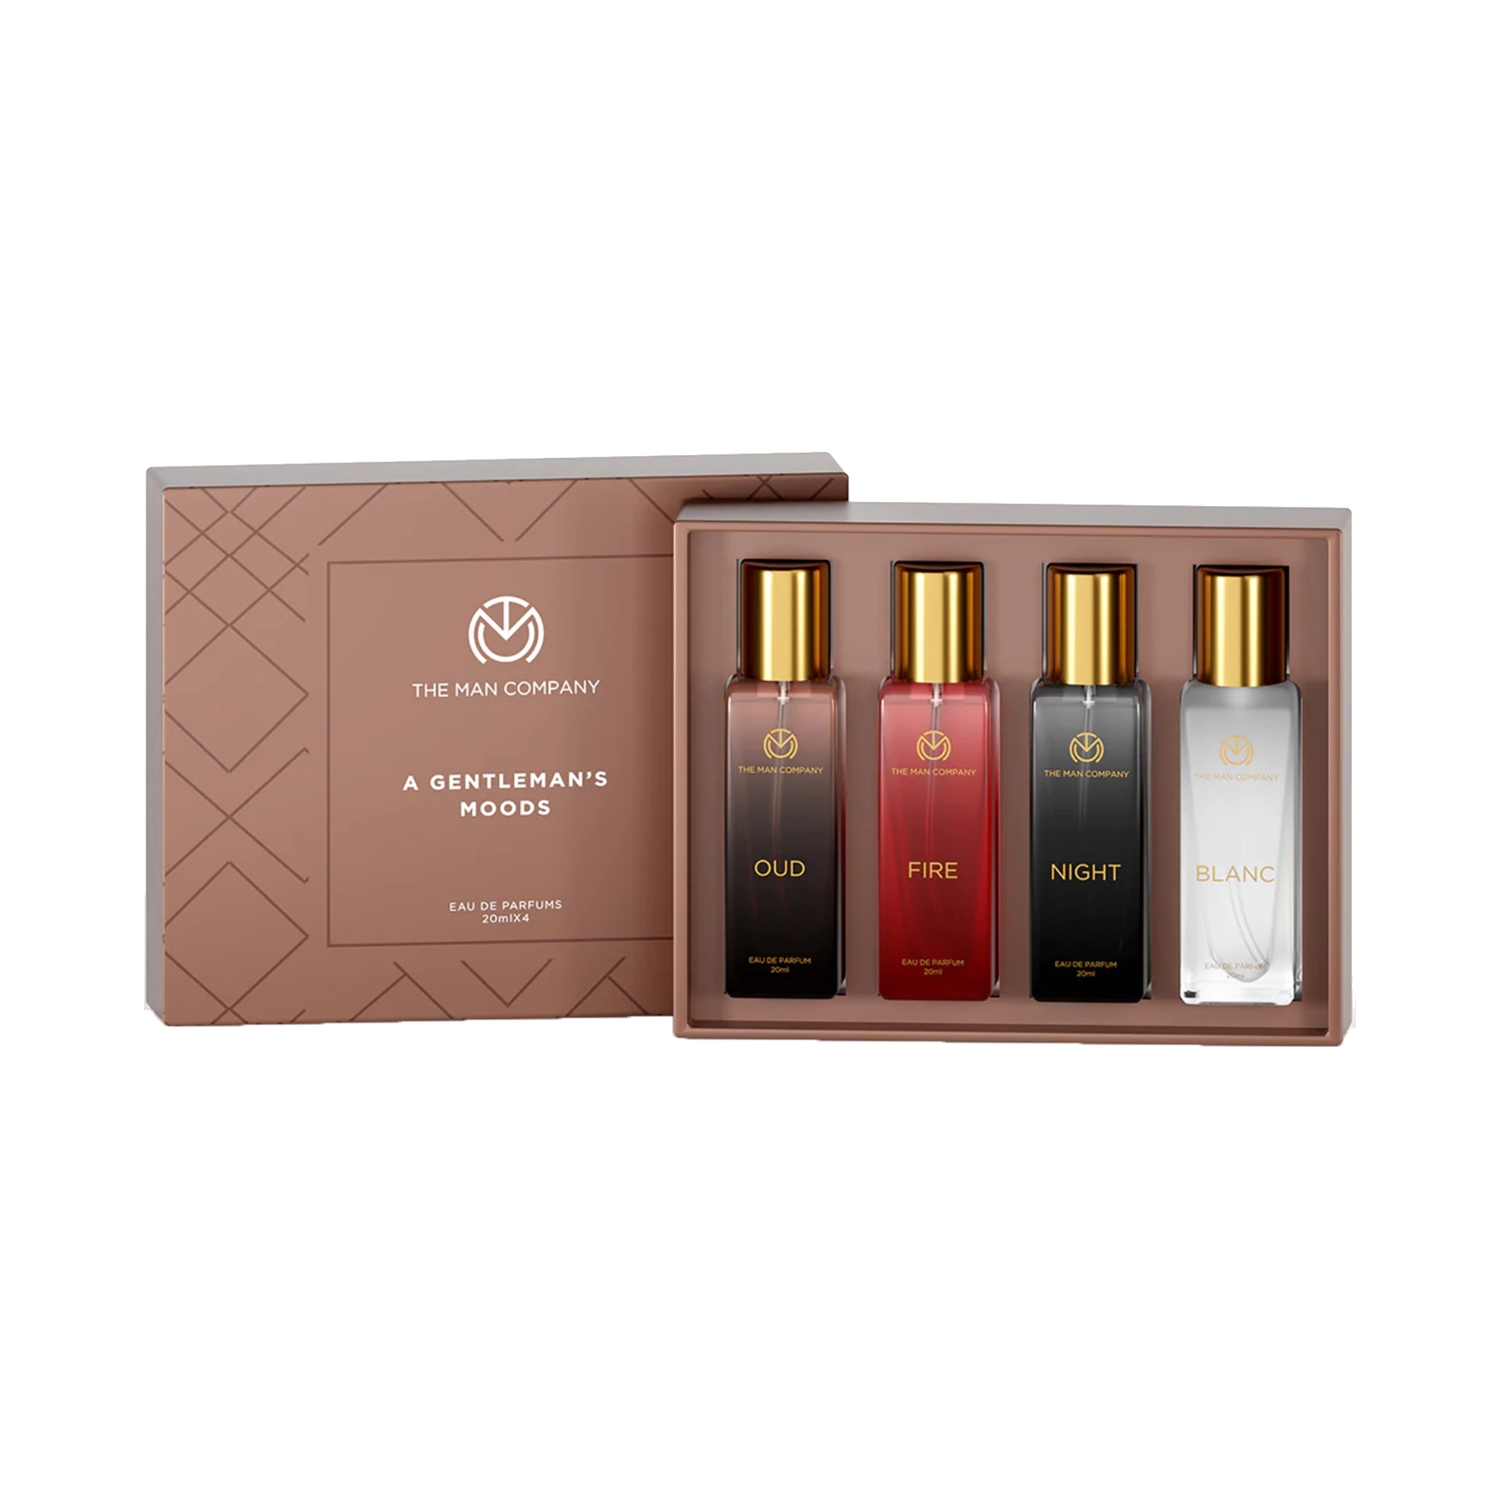 The Man Company | The Man Company A Gentleman’s Moods Premium Fragrance Gift Set (4 Pcs)